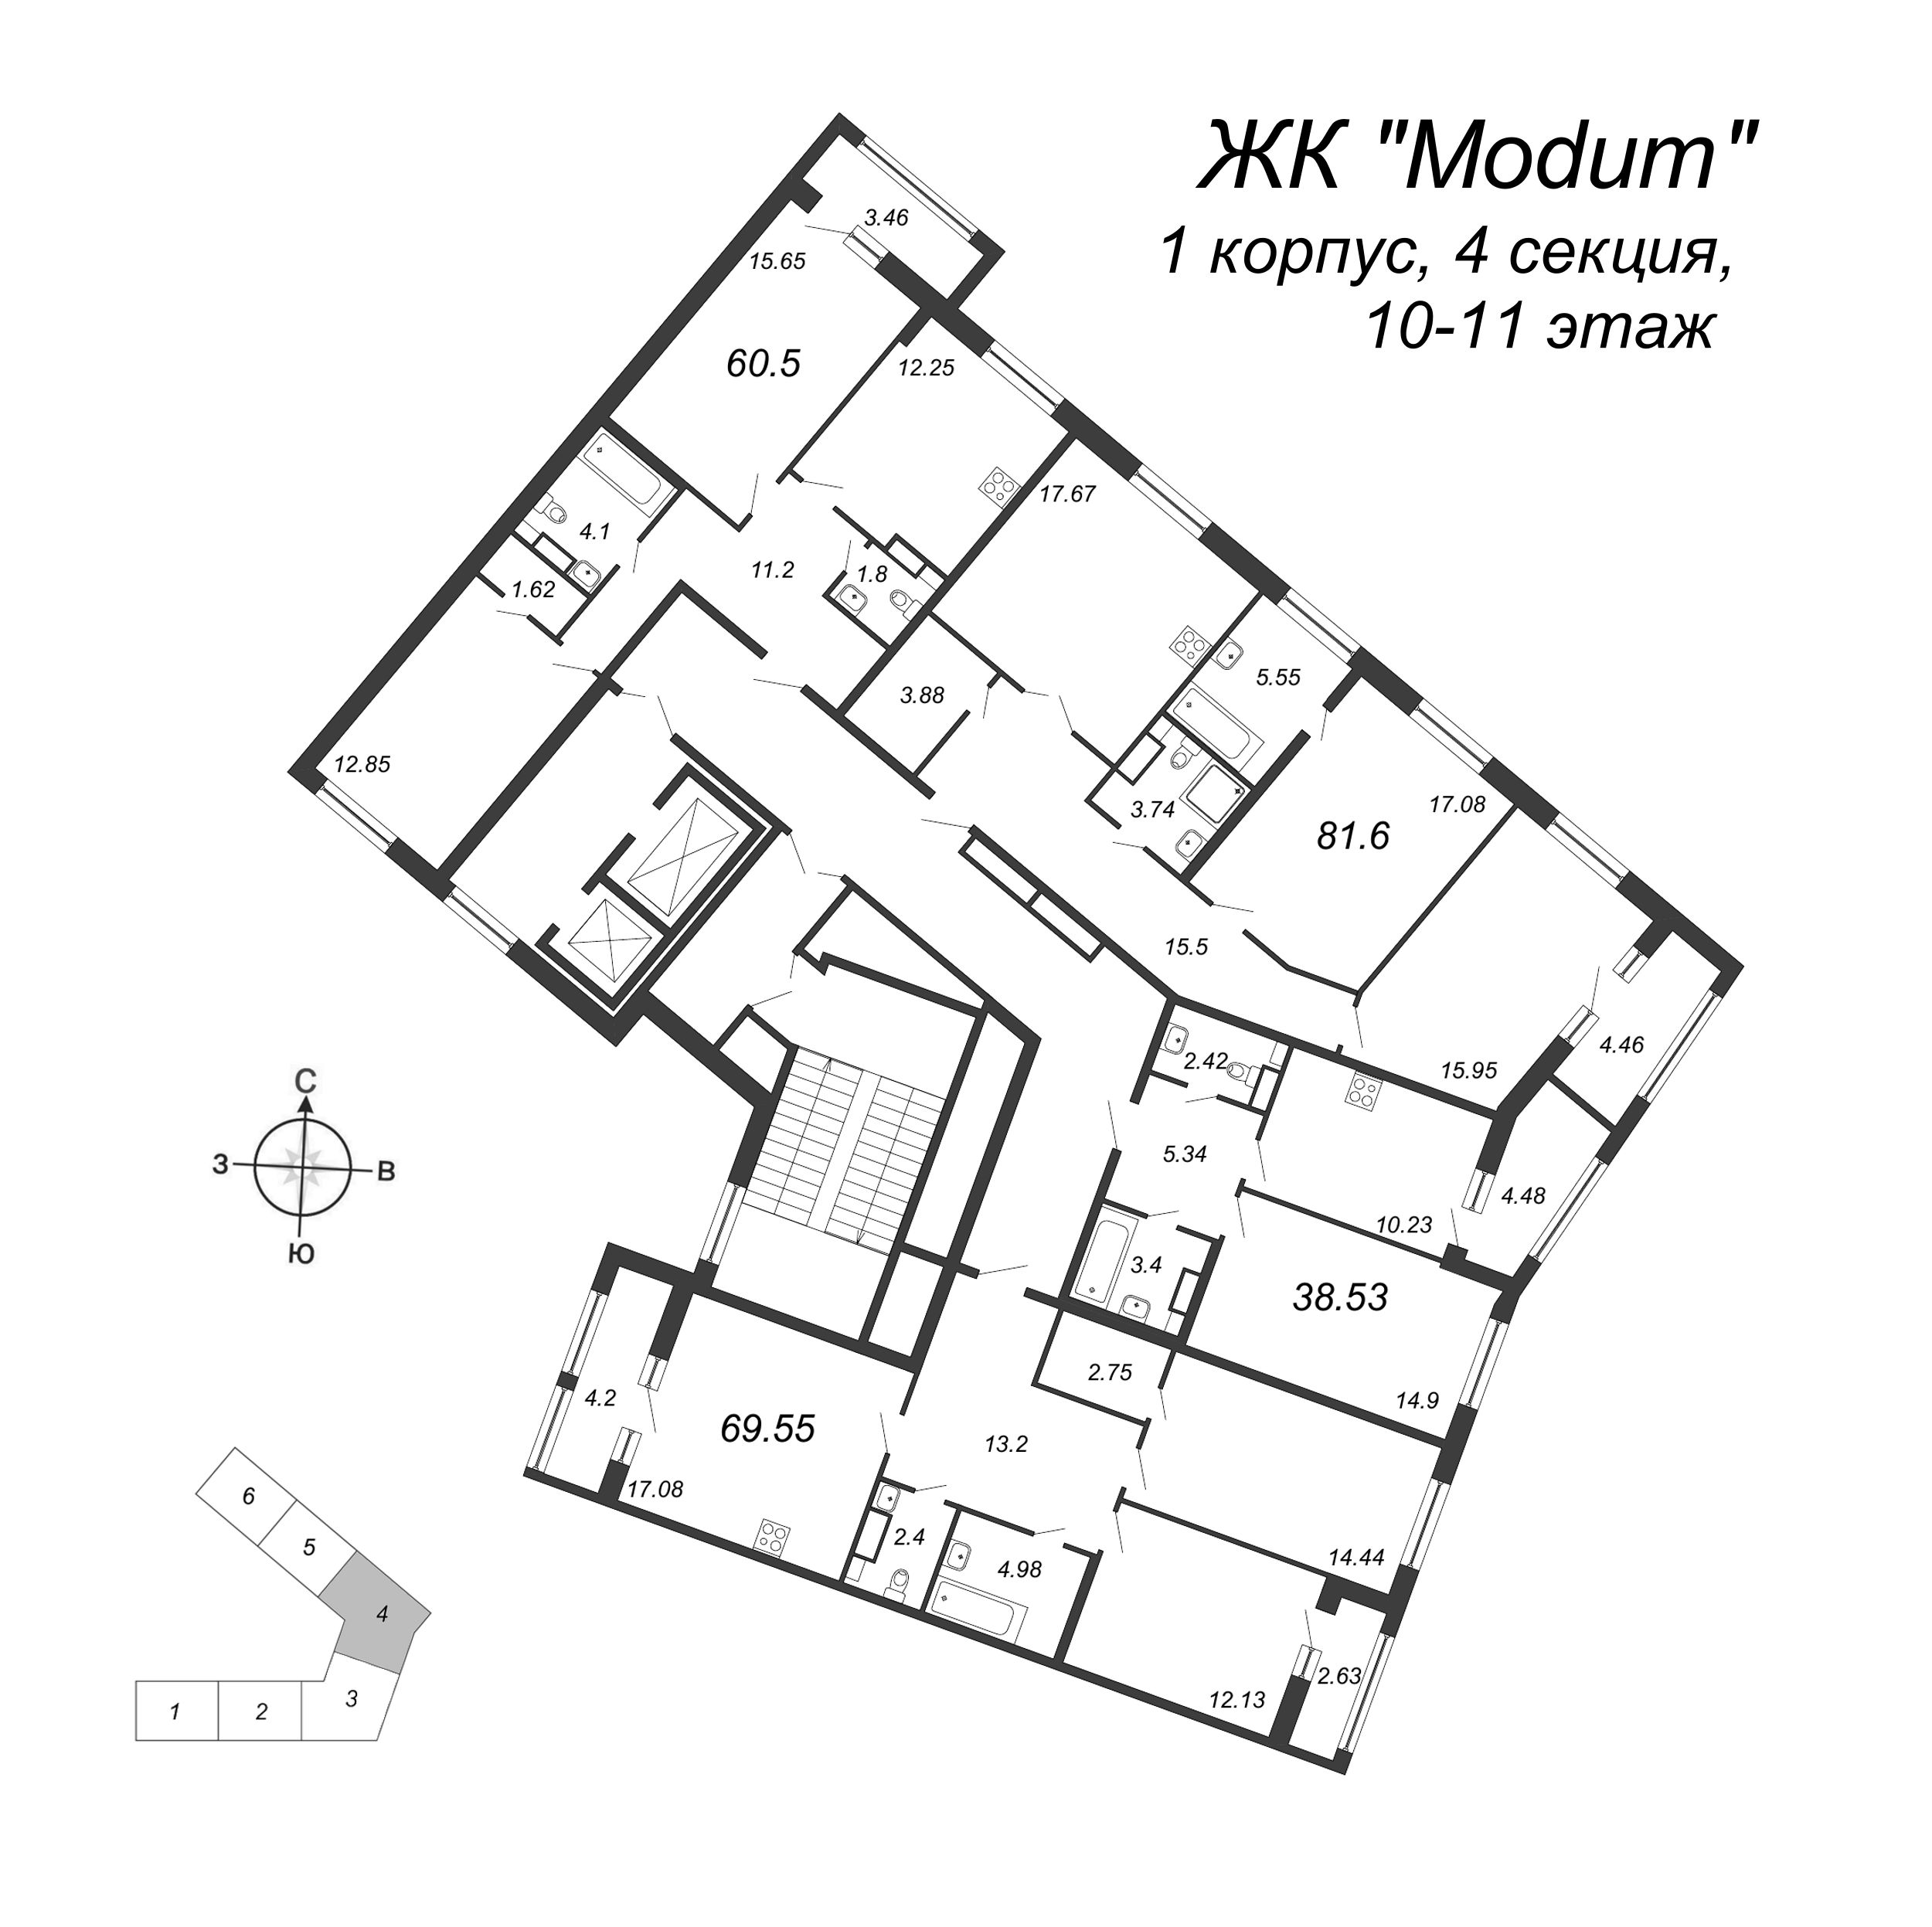 3-комнатная (Евро) квартира, 81.6 м² - планировка этажа